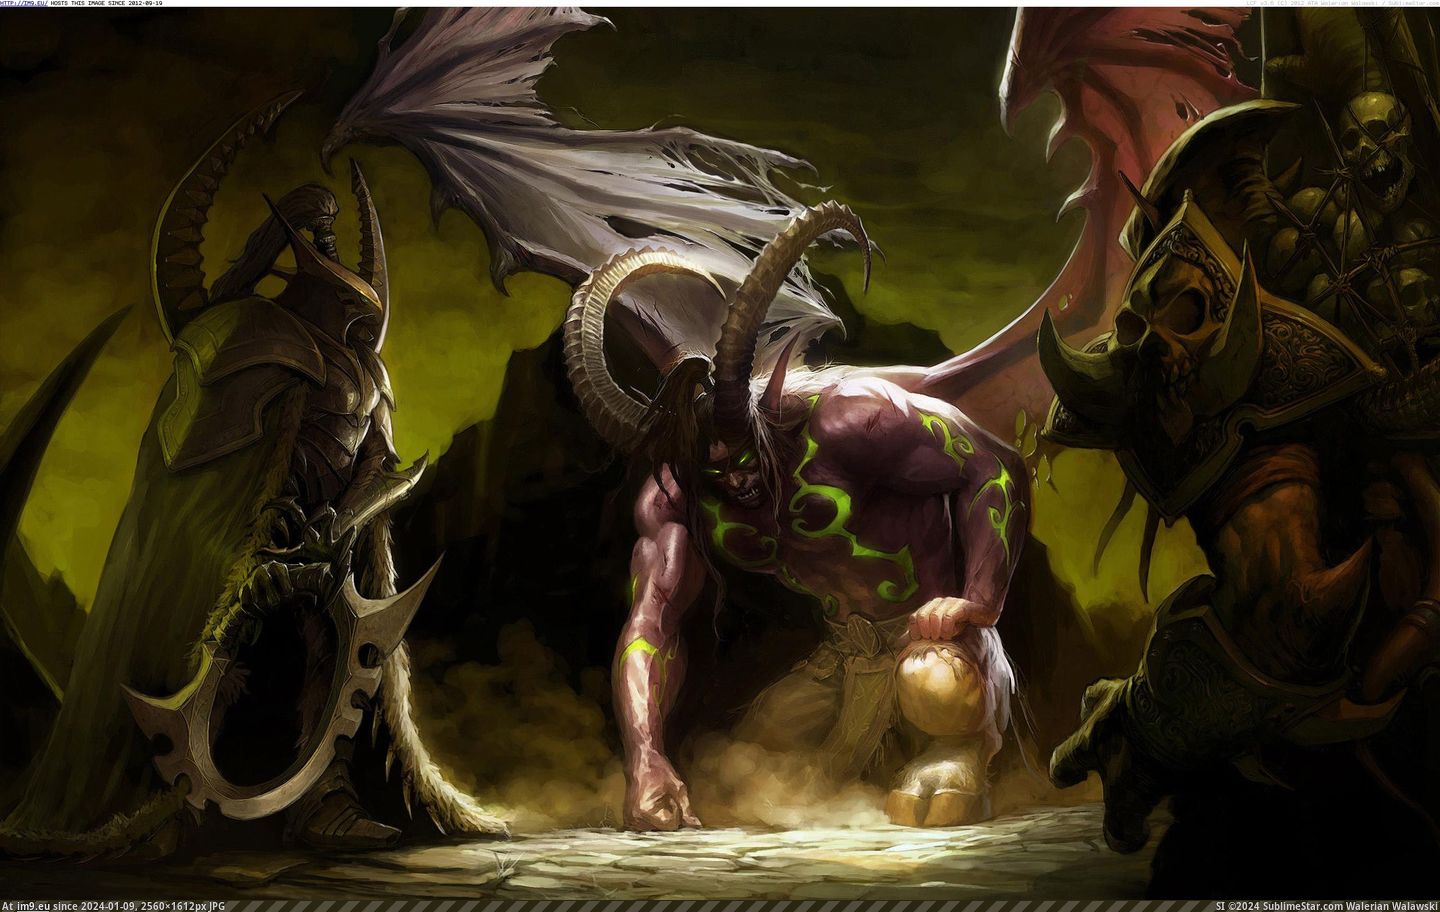 #Game #Video #Warcraft #World Video Game World Of Warcraft 84482 Pic. (Изображение из альбом Games Wallpapers))